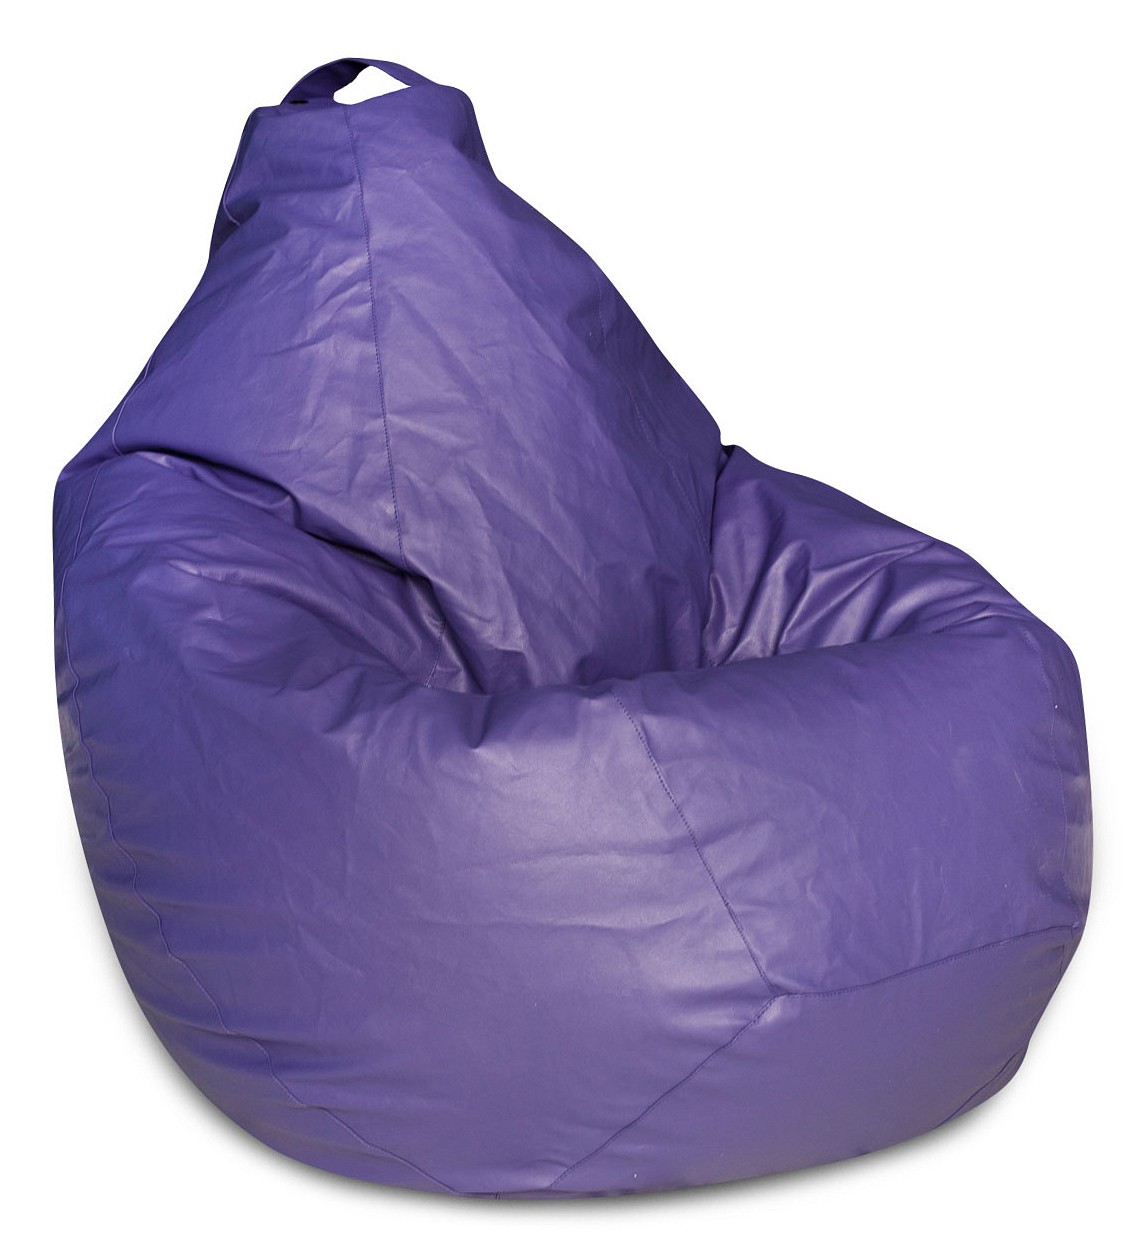 фото Кресло-мешок dreambag кресло-мешок xl, фиолетовый